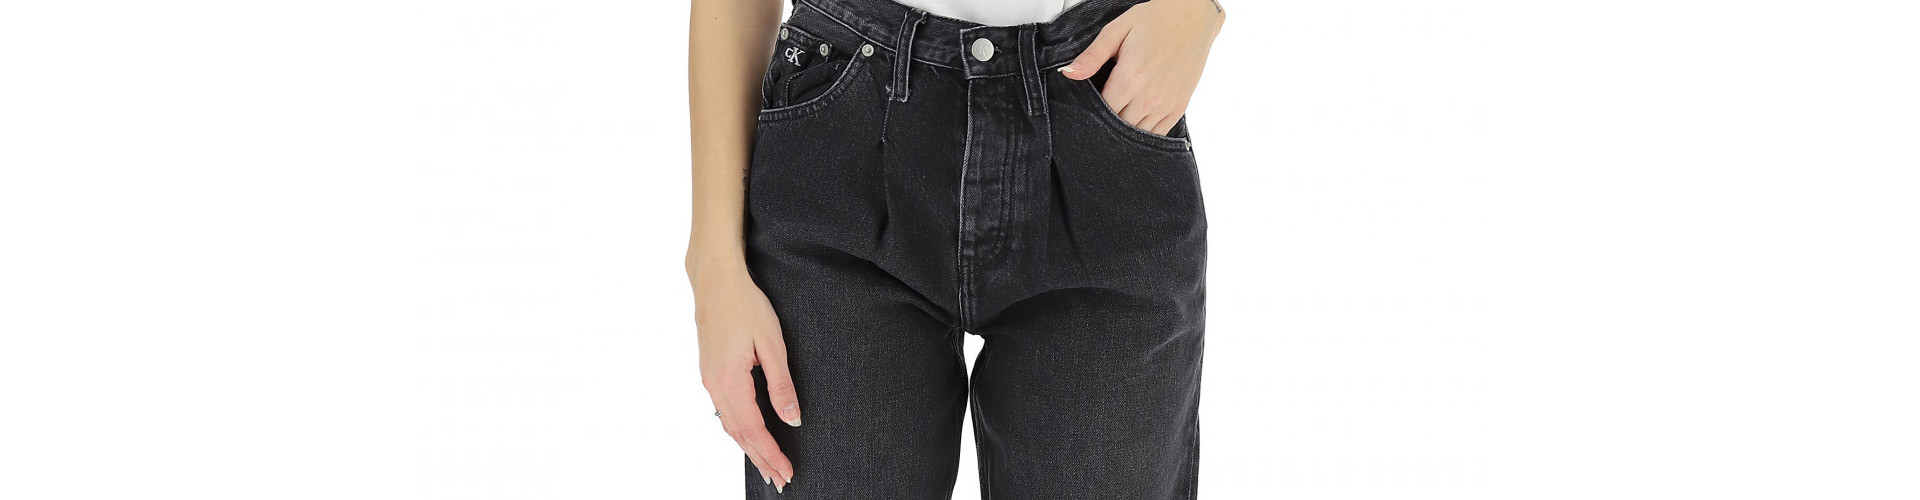 Jeans-baggy-donna.jpg